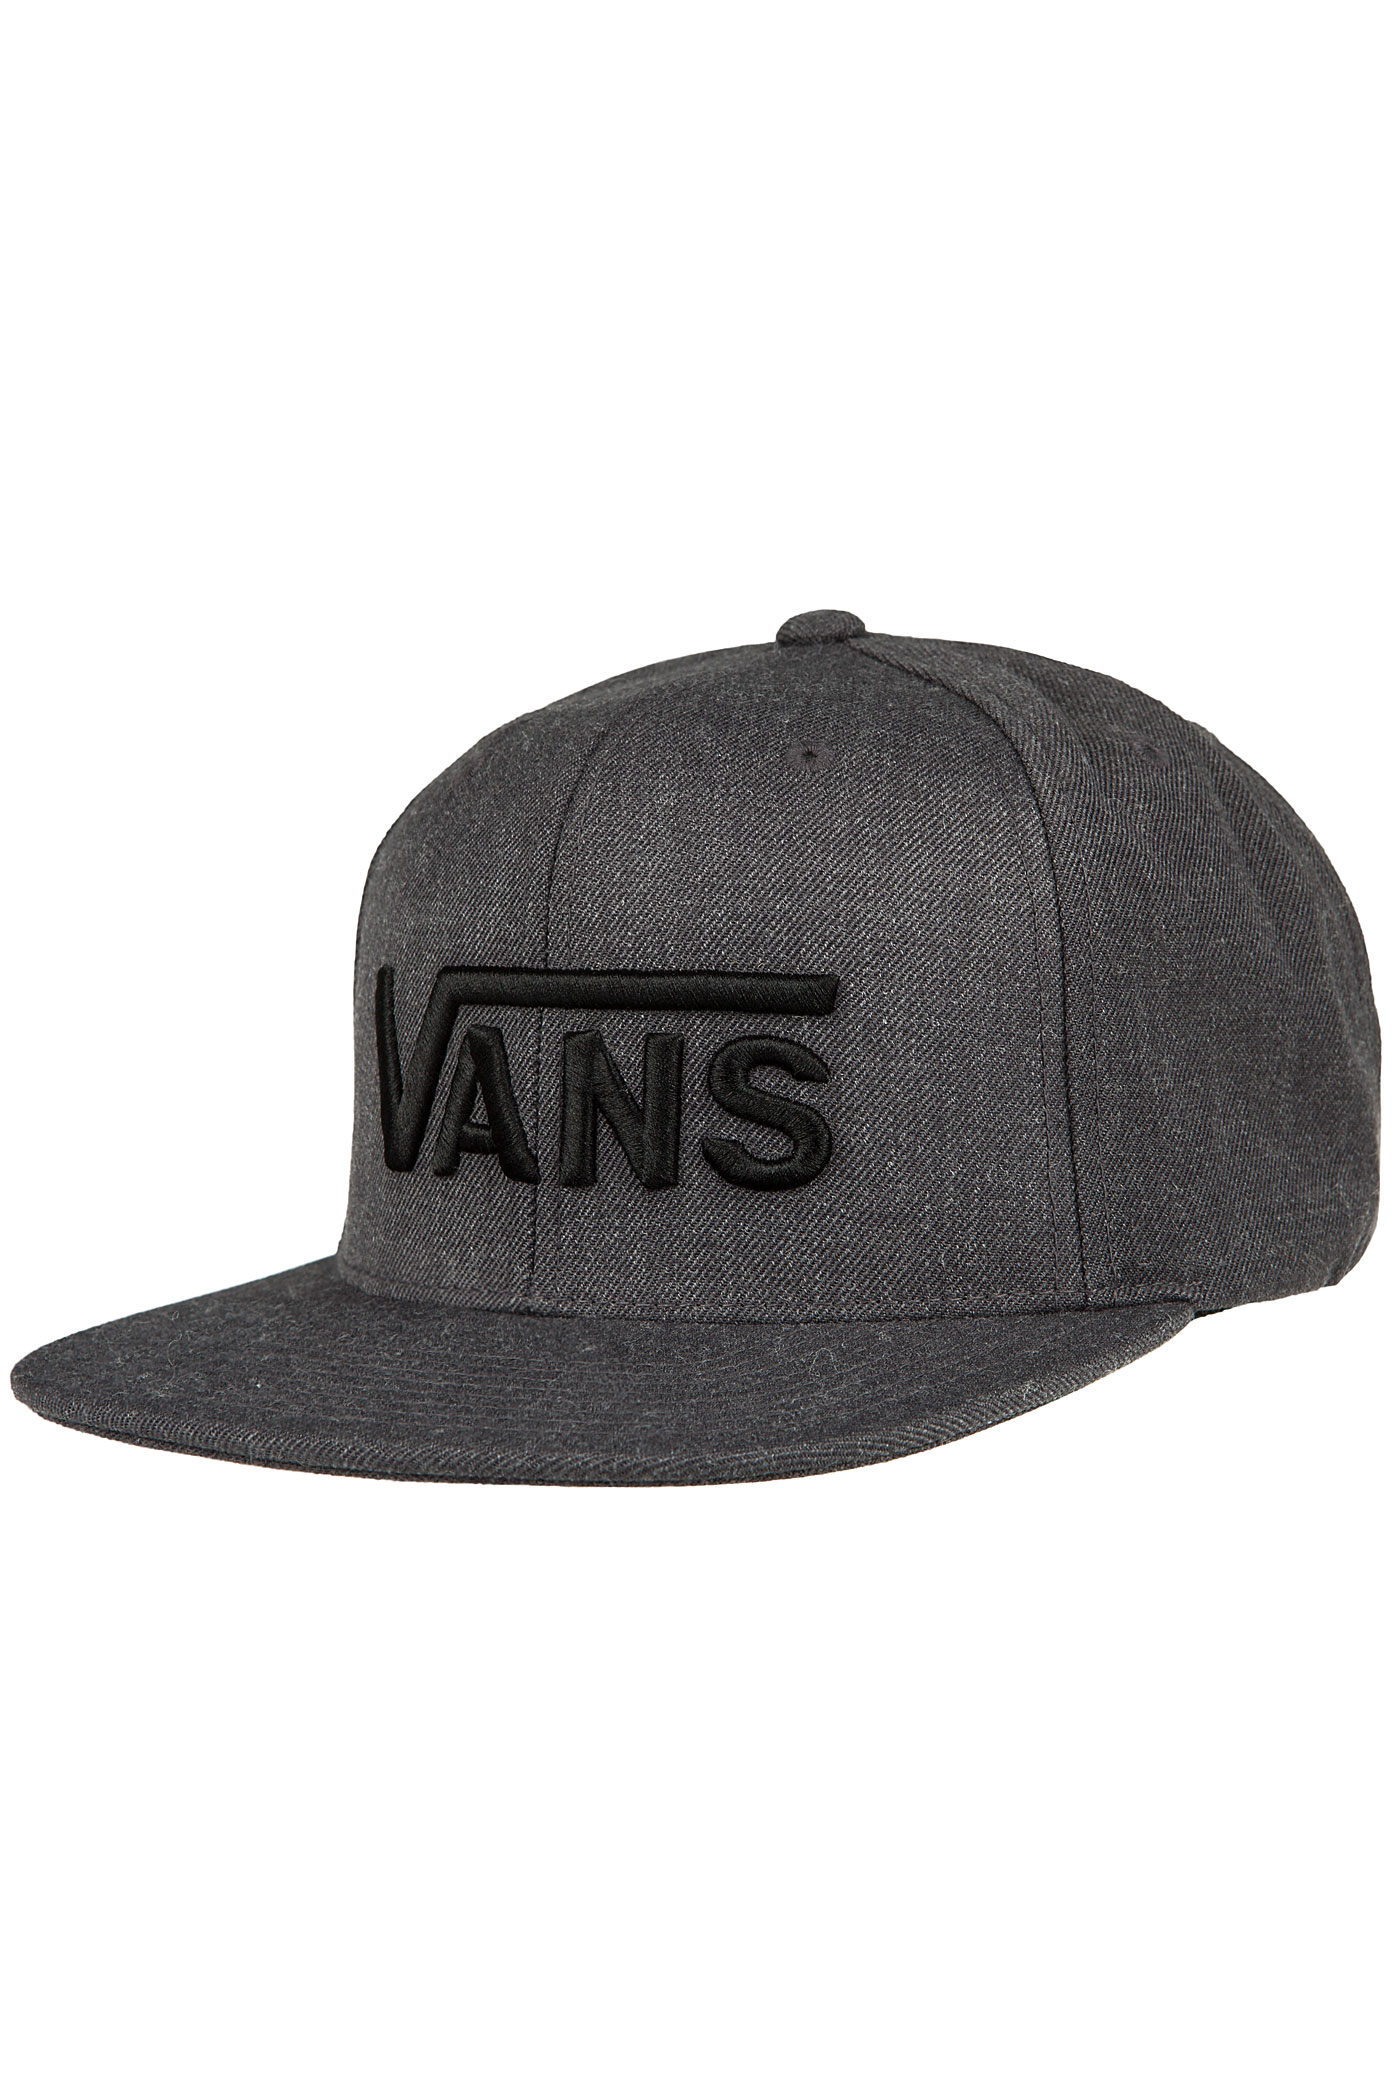 Vans Drop V Snapback Cap (black black) buy at skatedeluxe